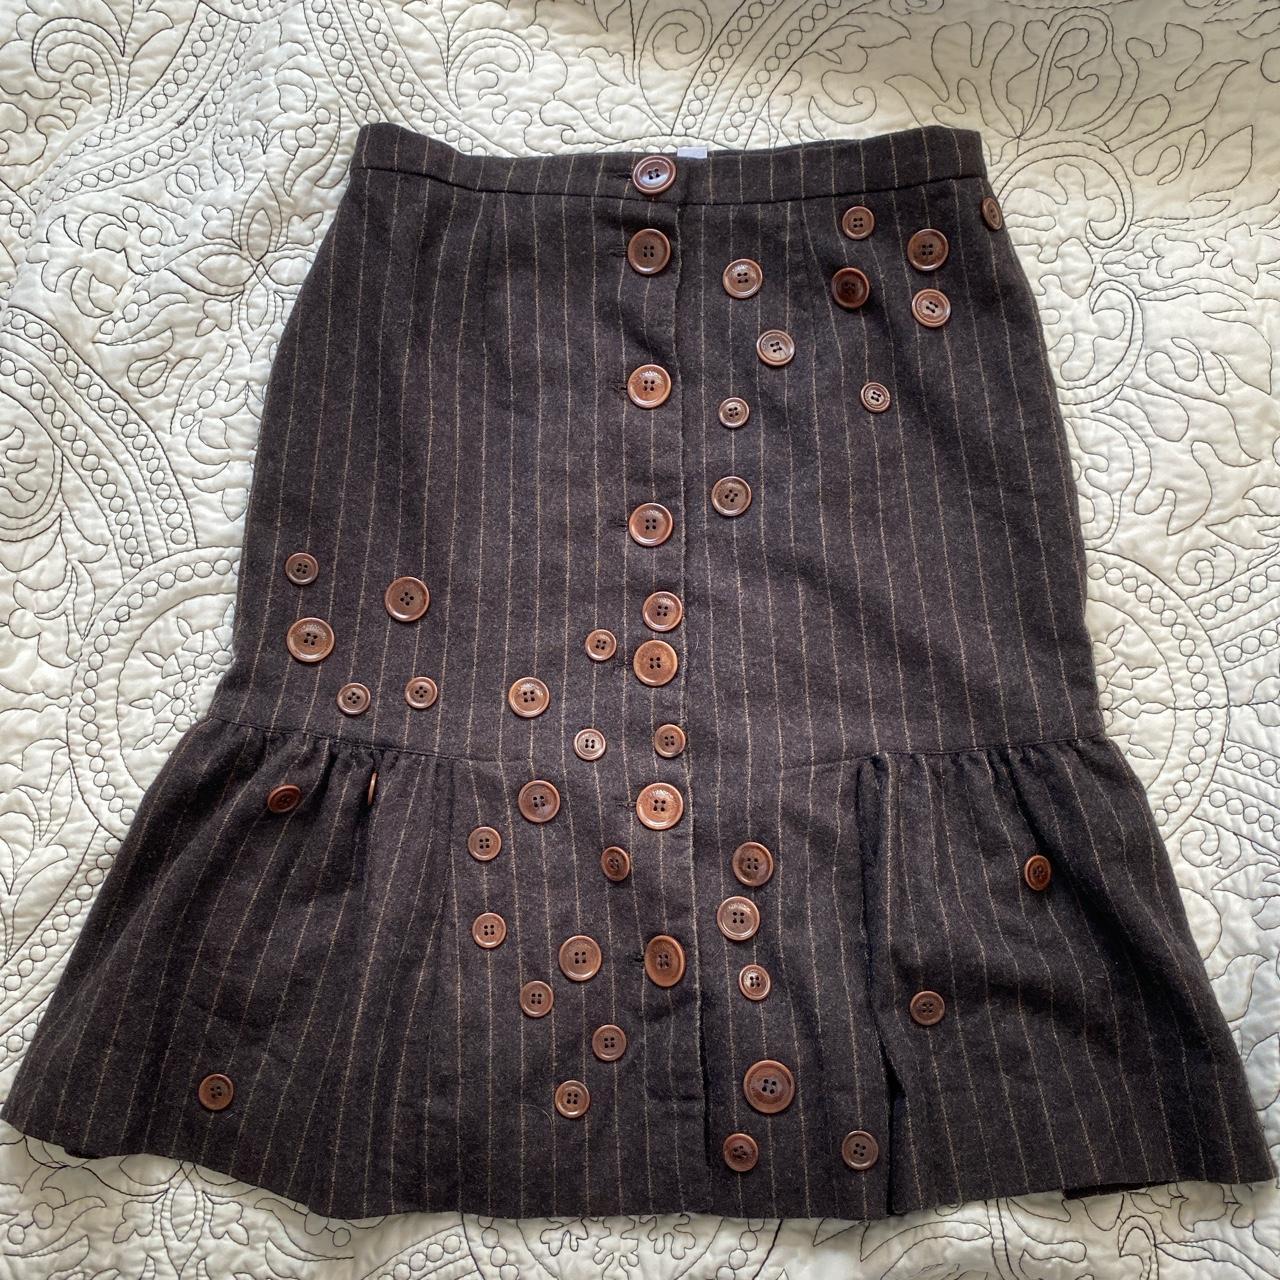 Moschino Cheap & Chic Women's Brown and Tan Skirt (2)